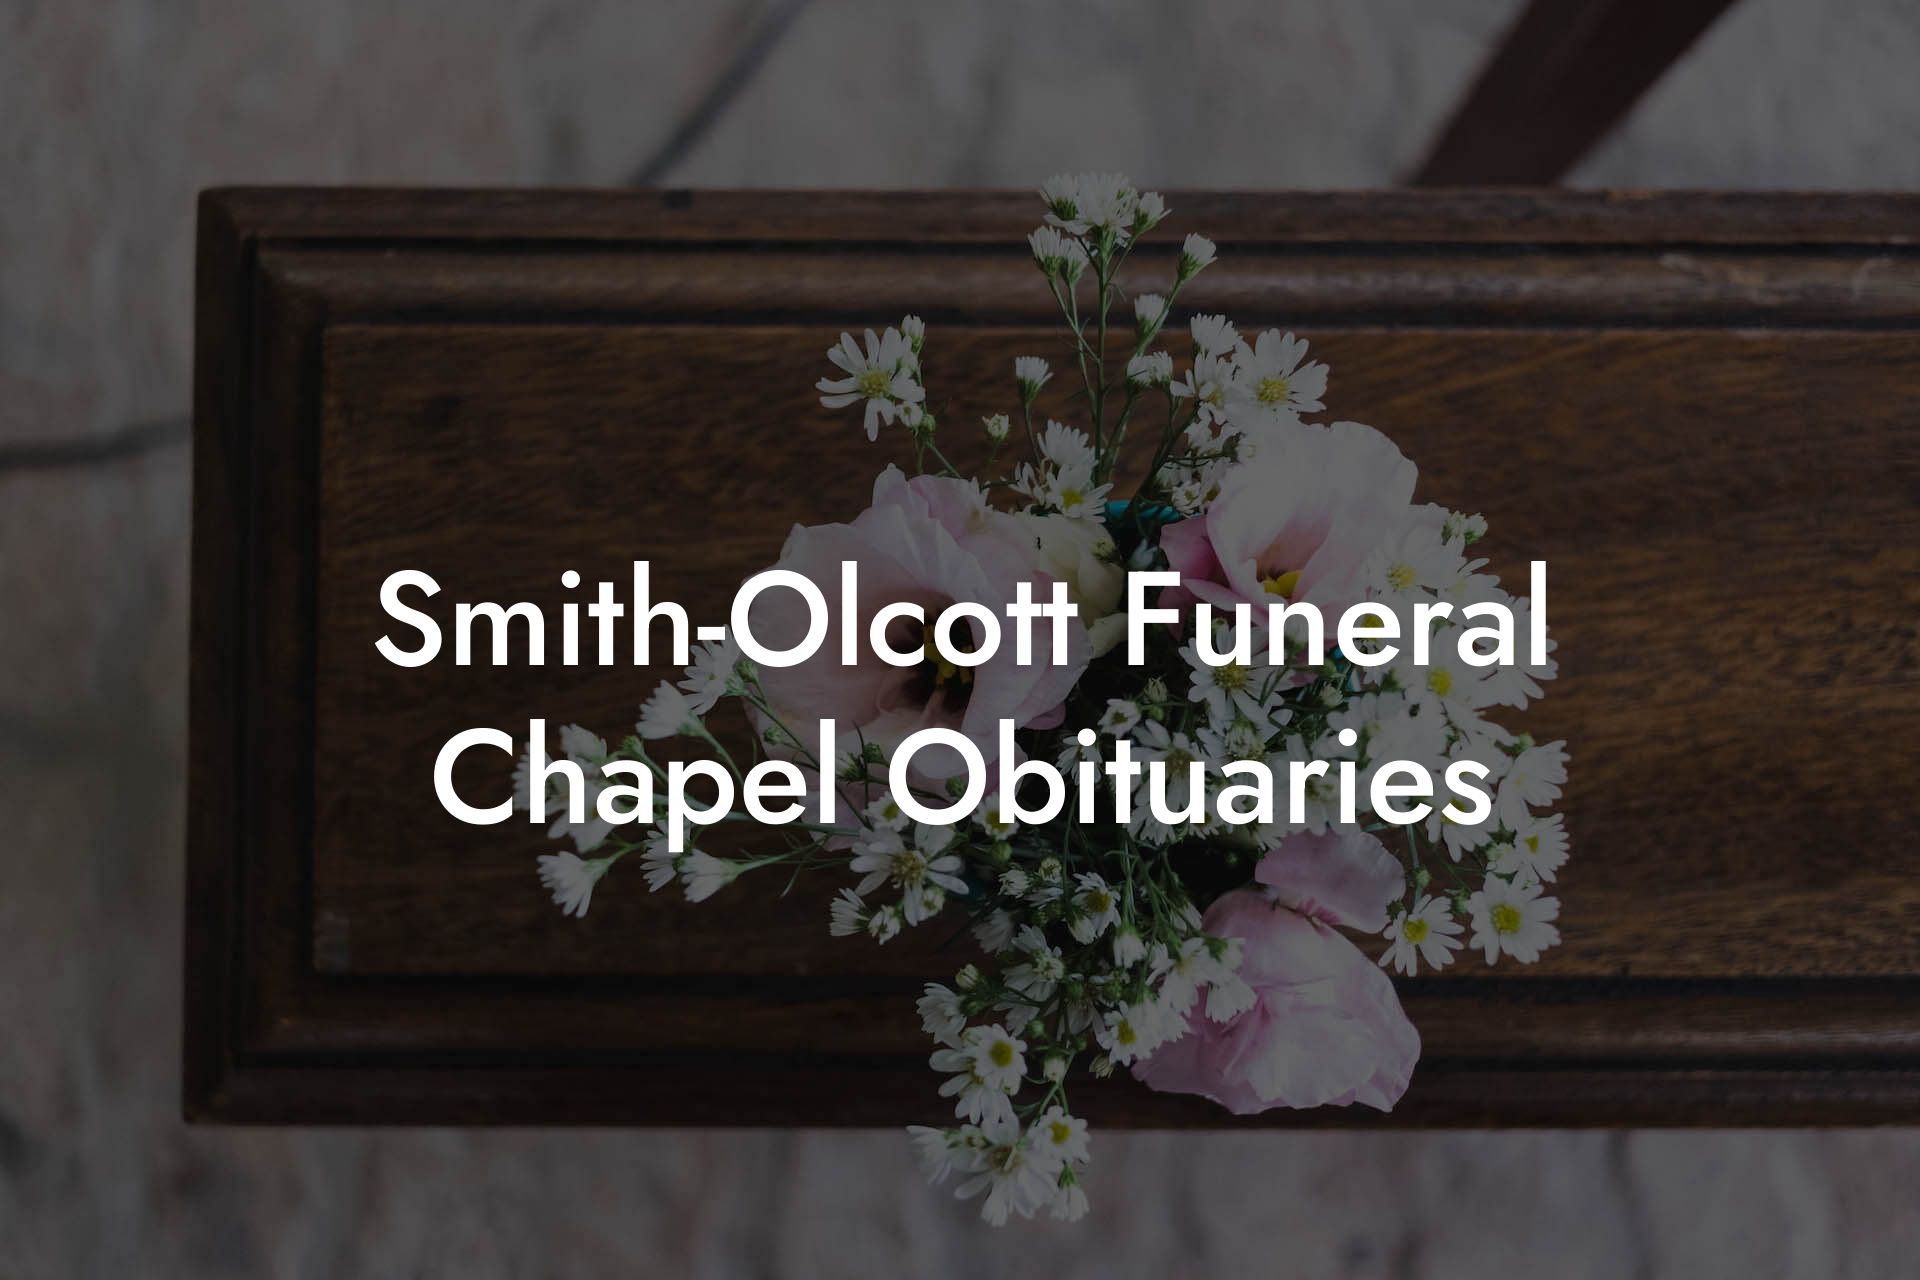 Smith-Olcott Funeral Chapel Obituaries